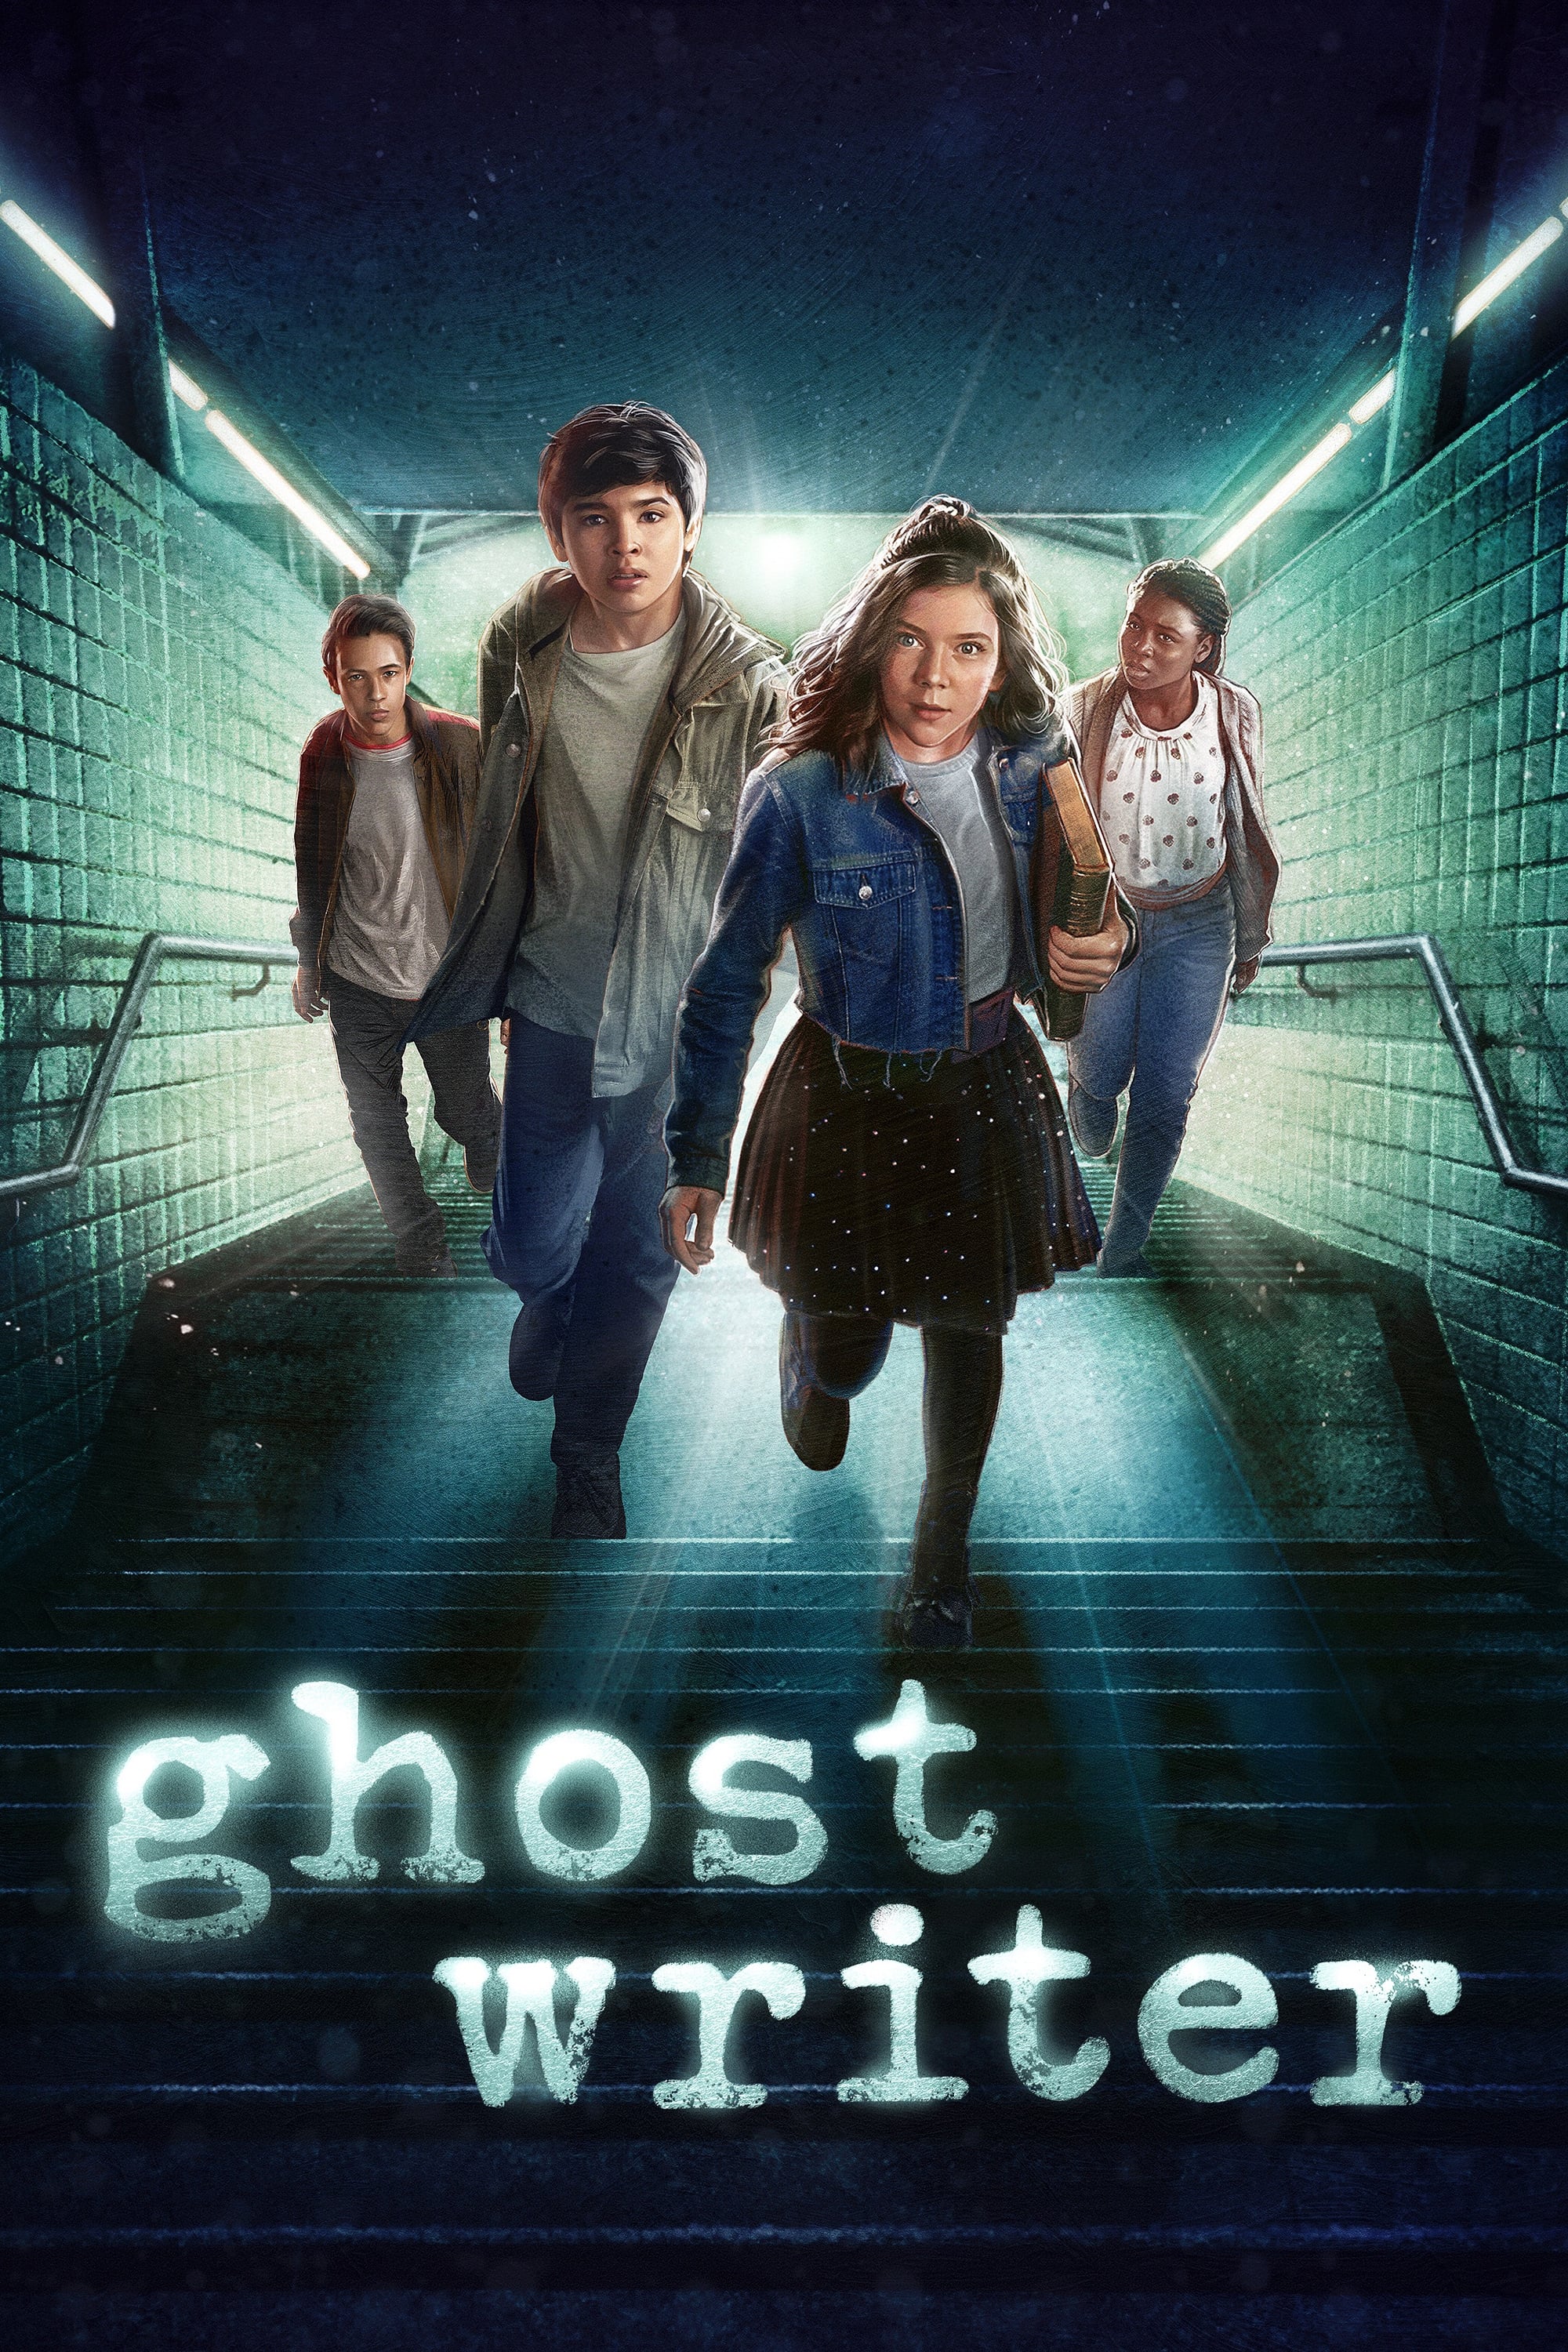 Ghostwriter Cast 